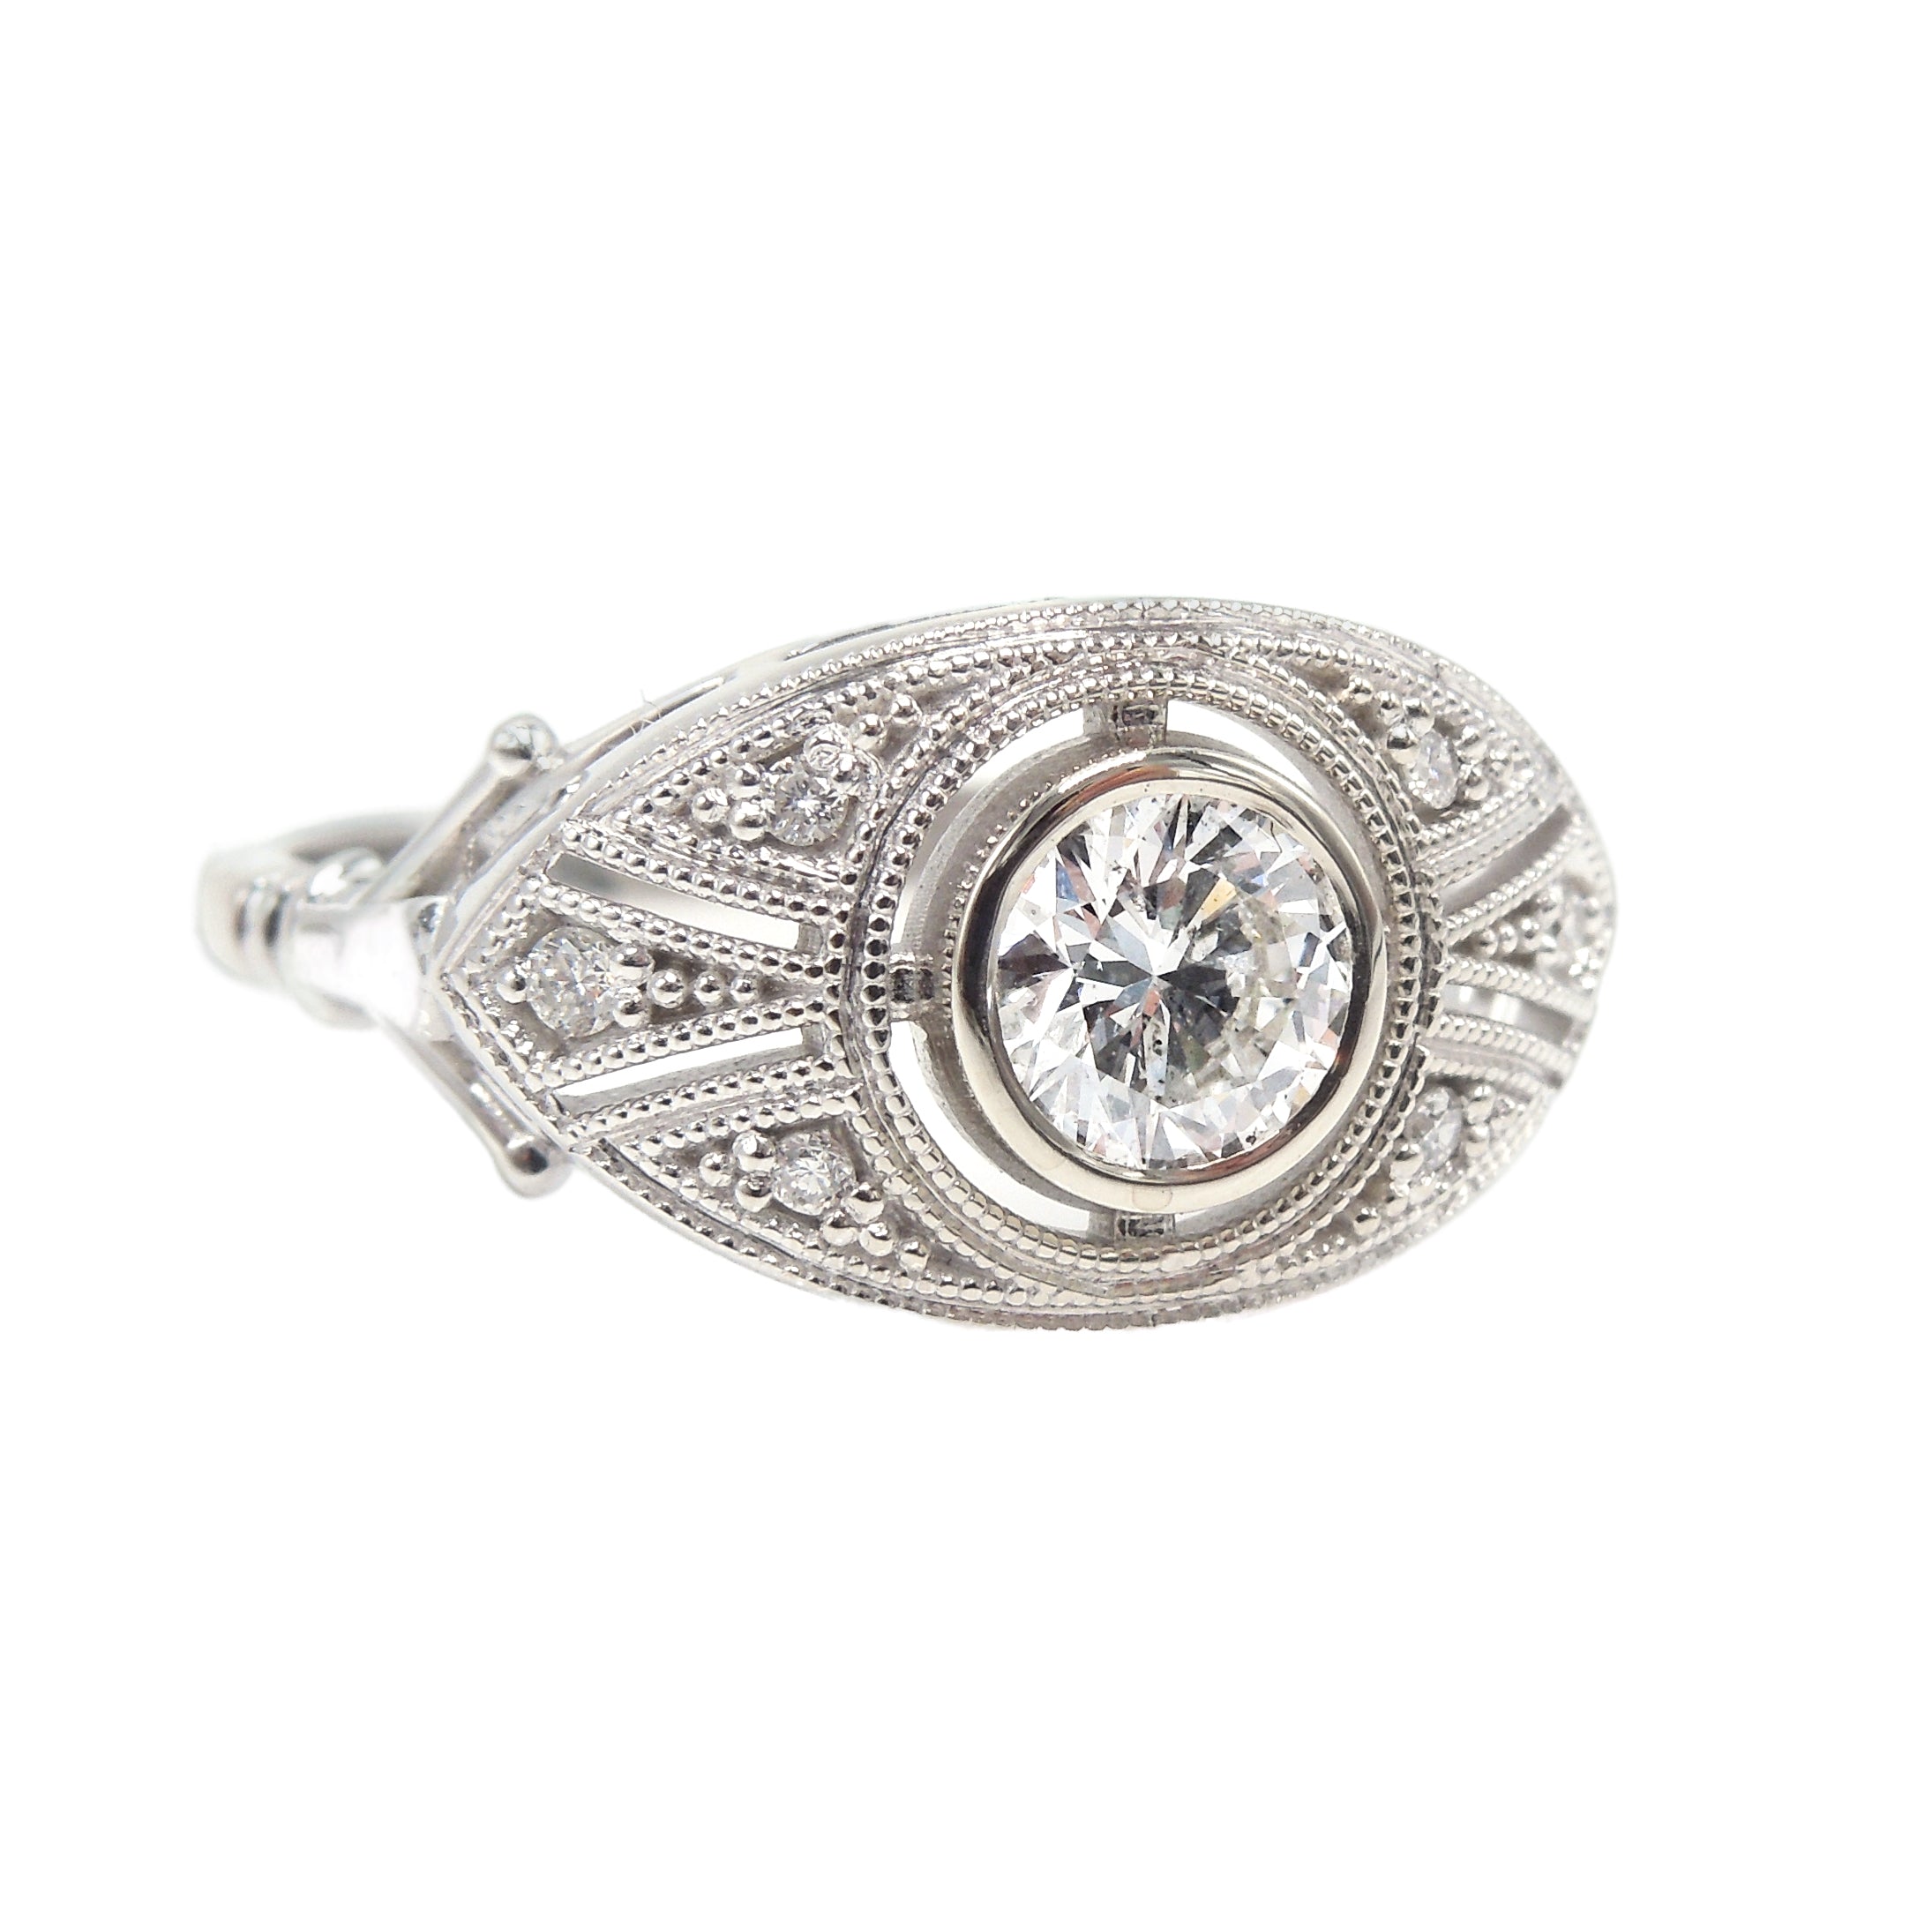 Almond Shaped Art Deco Style Engagement Ring with Half Carat Bezel Set Diamond